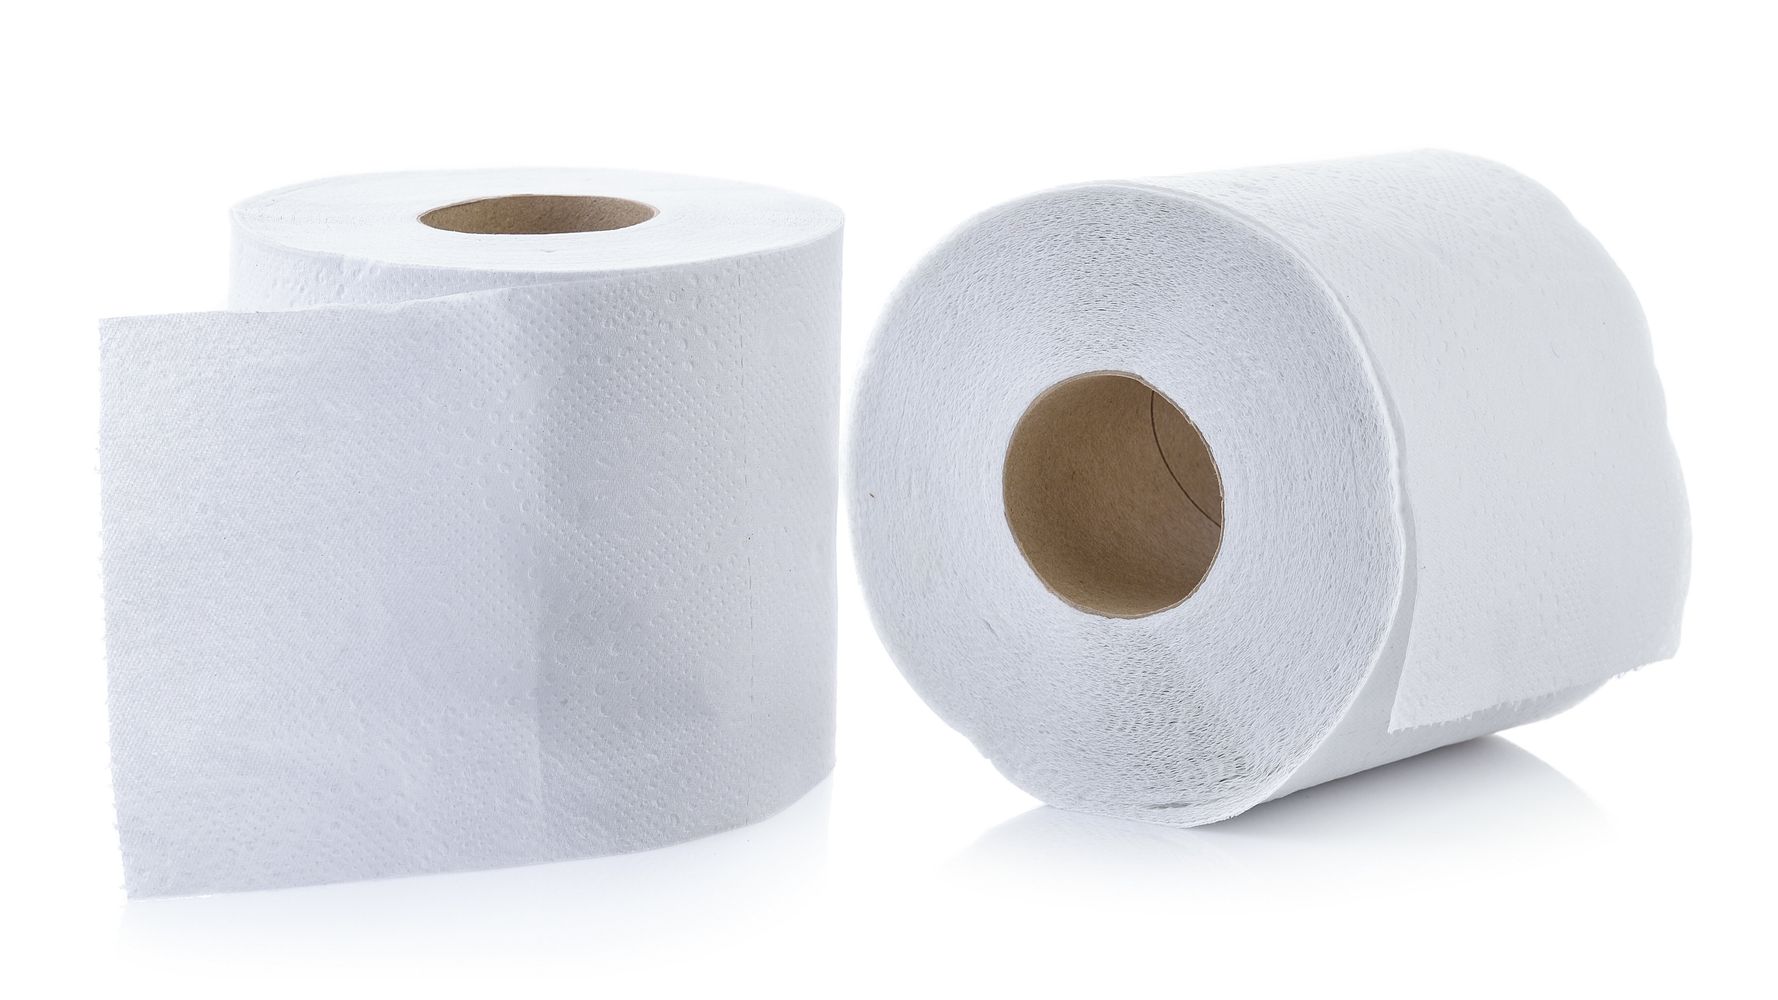 Toilet paper maker rolls out designer covers – The Denver Post